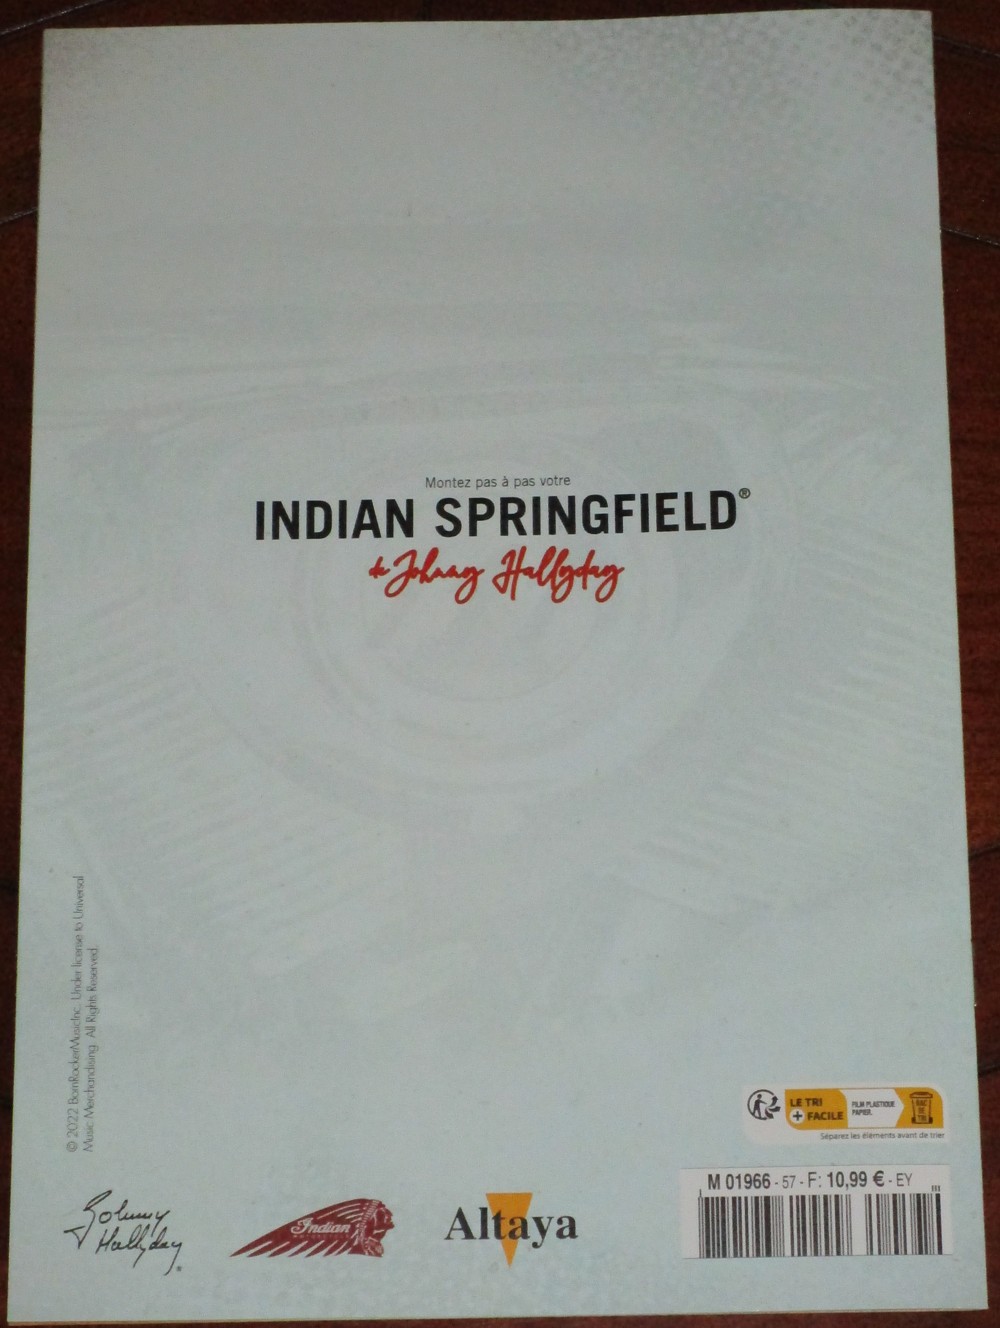 Altaya:Indian Springfield de JH n°57 024-a142